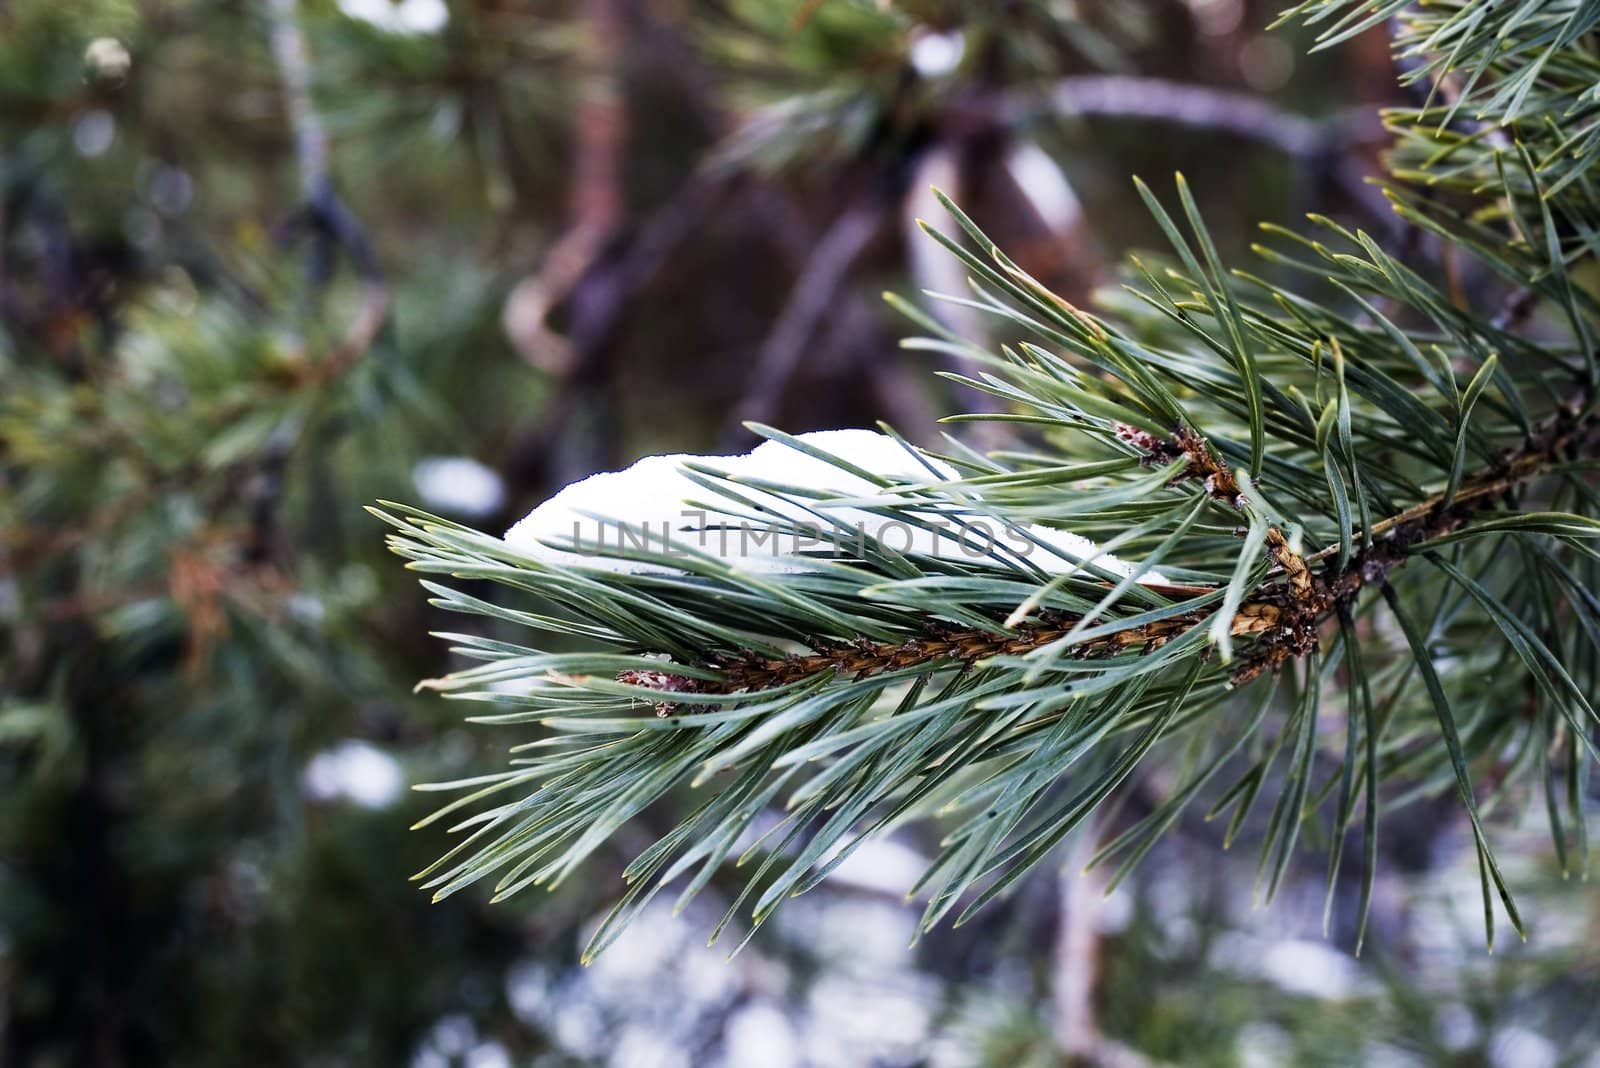 snow on pine tree - february